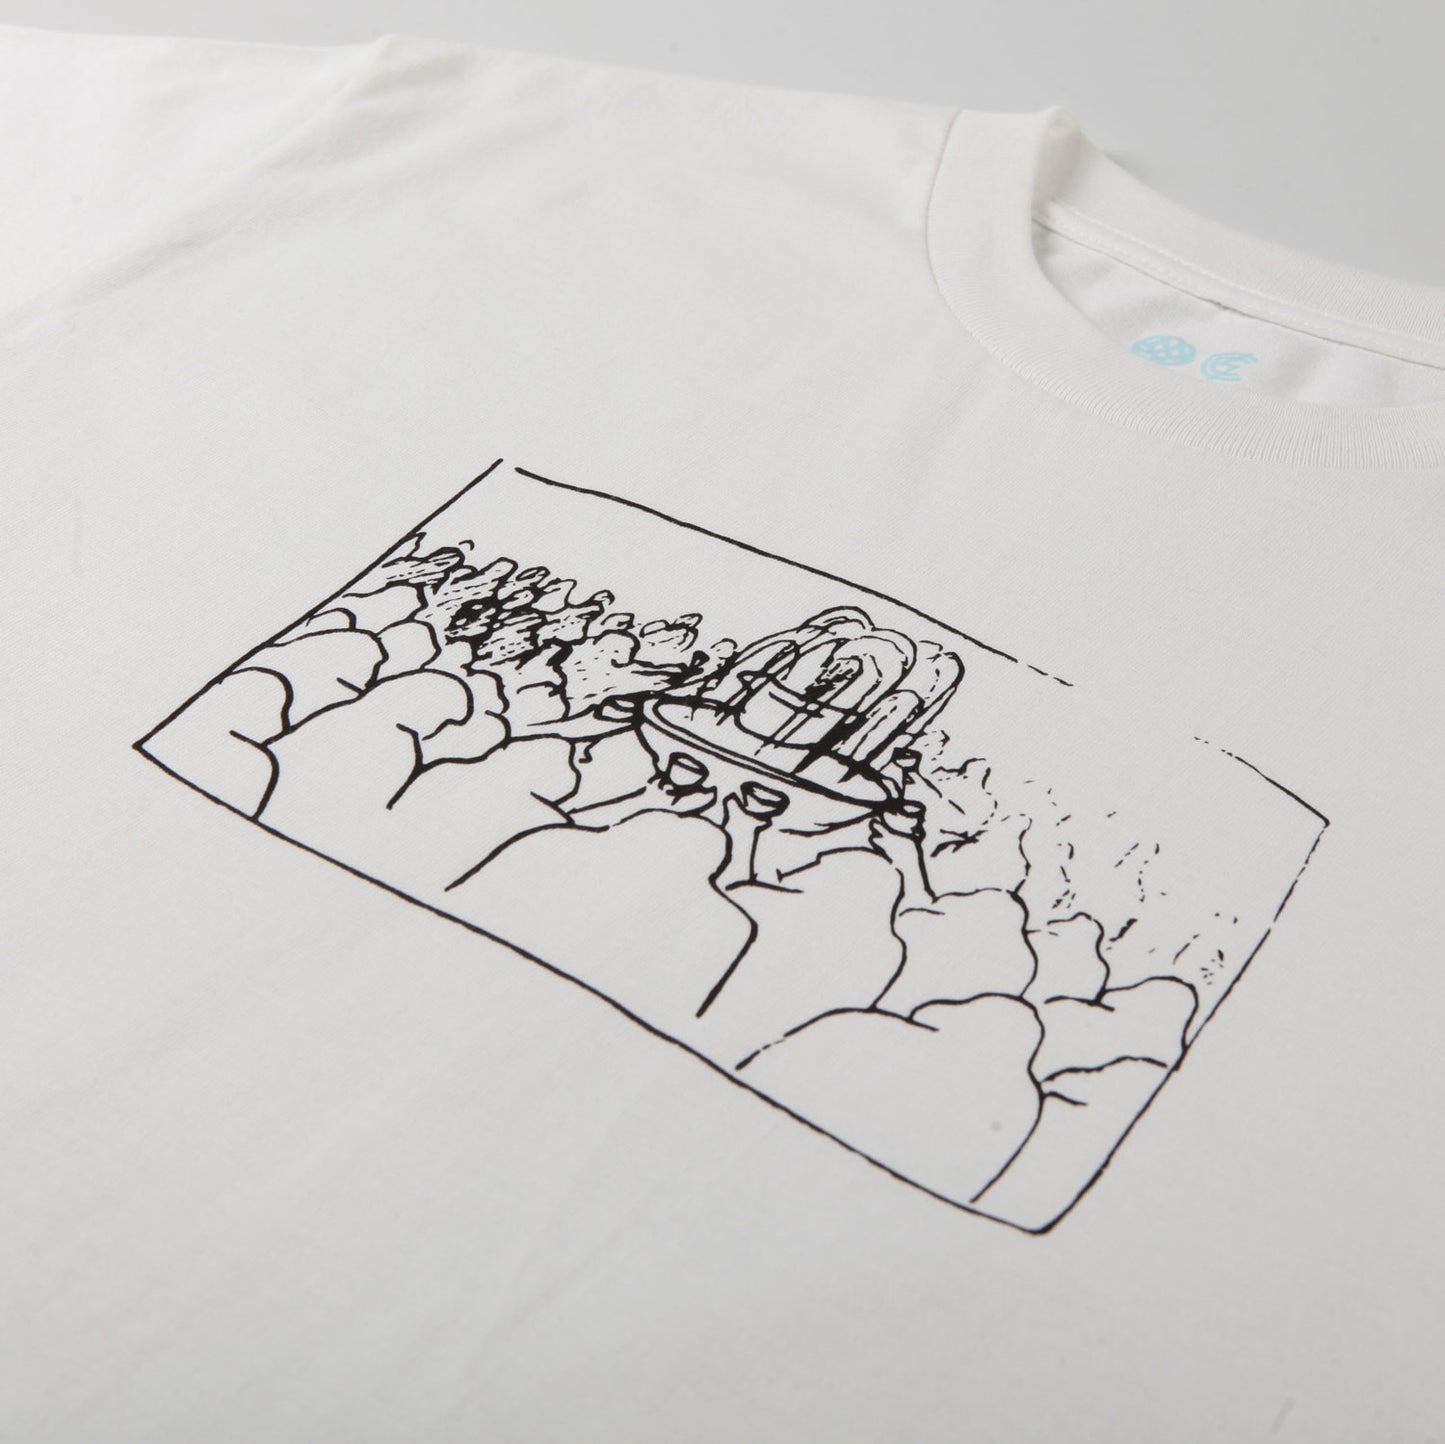 Fountain X CSC 'Youth' T-Shirt (White)